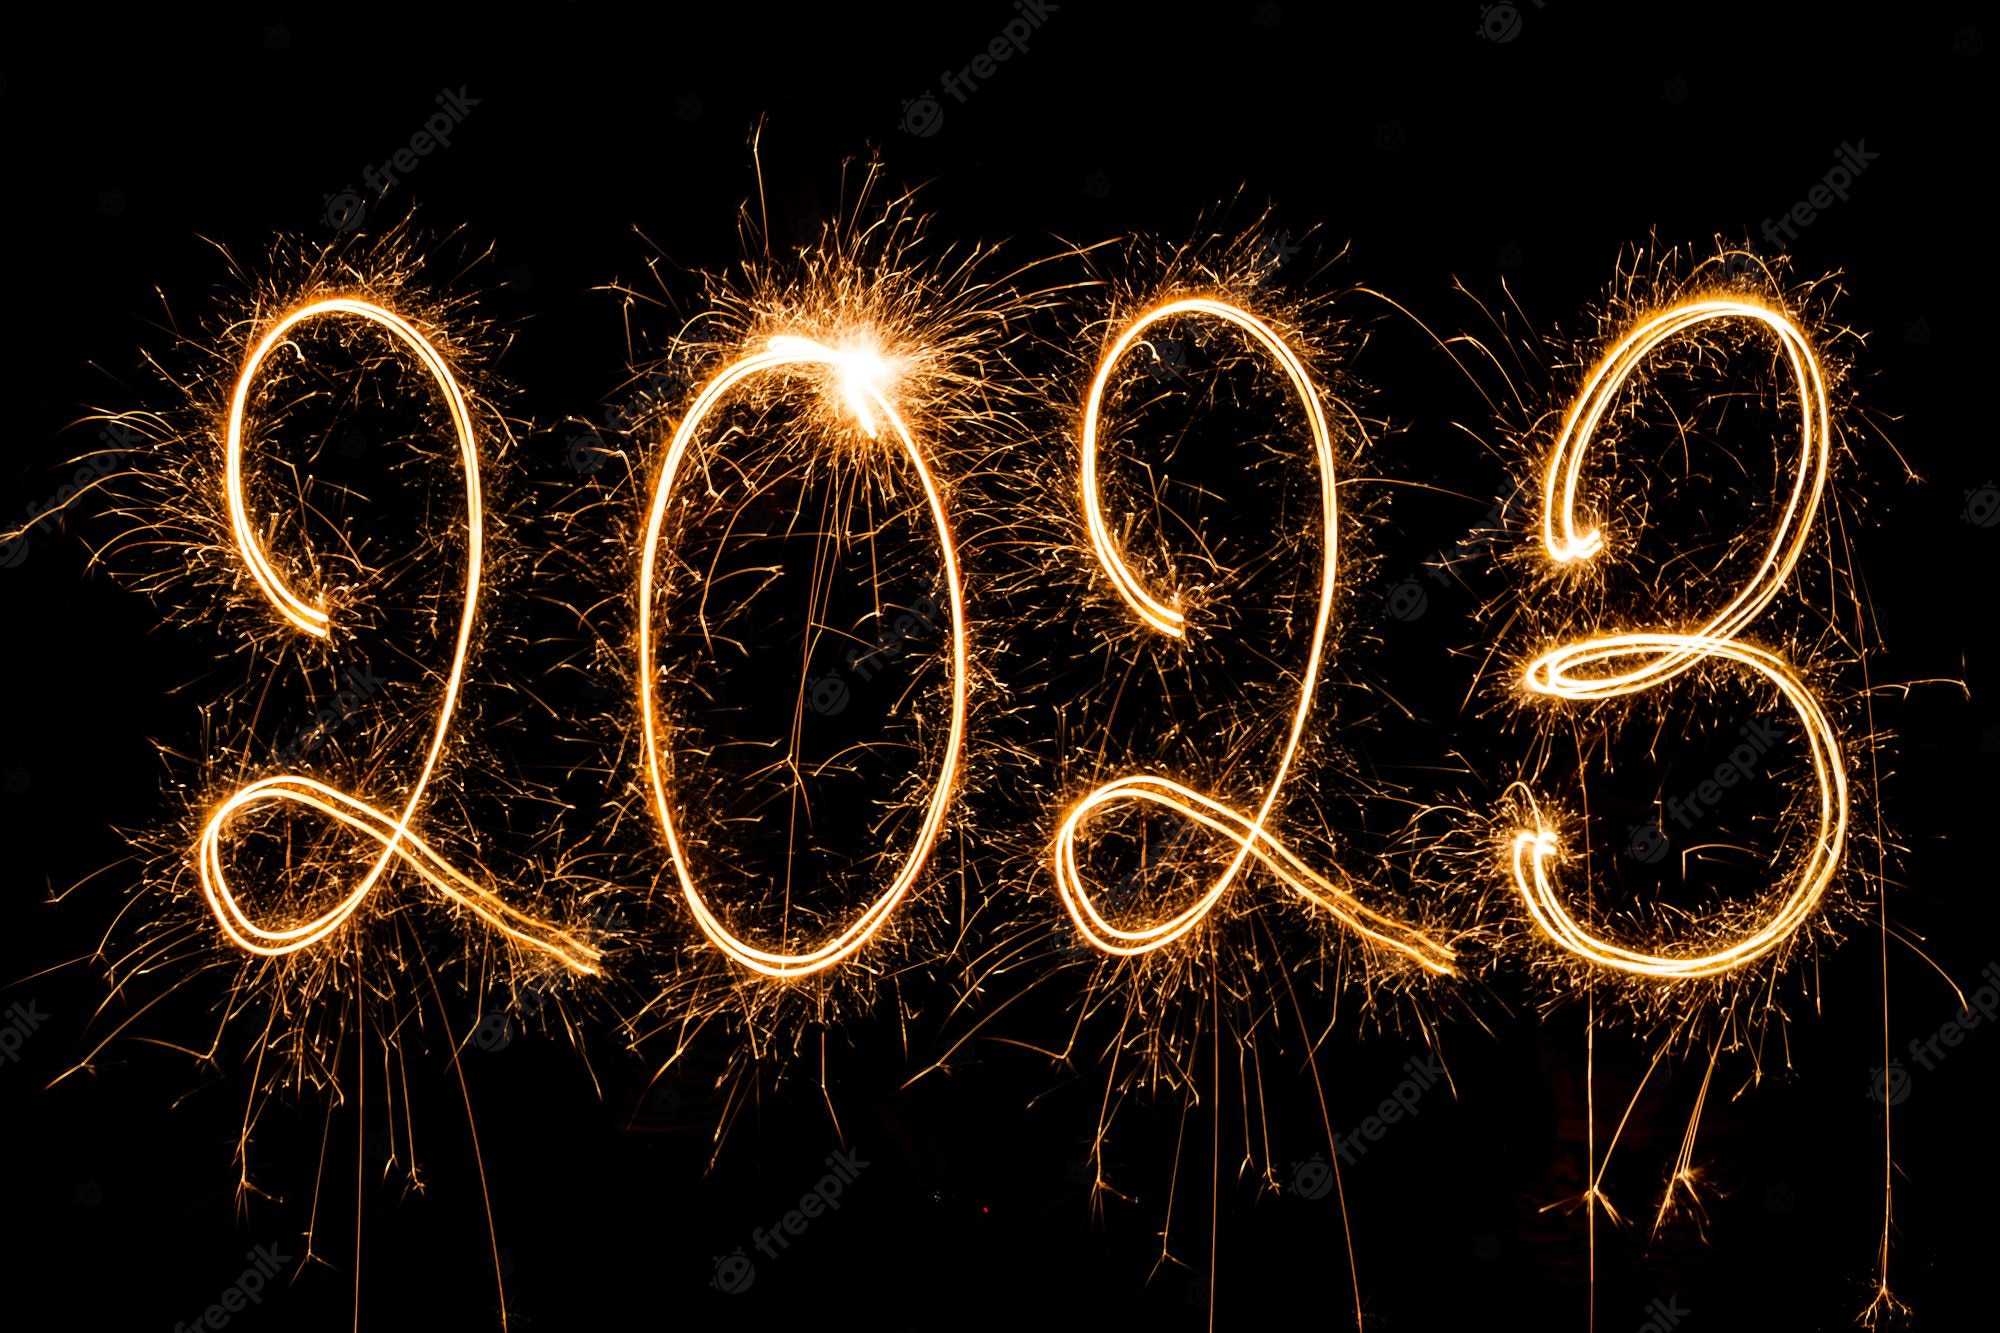 Happy new year 2023 Image. Free Vectors, & PSD